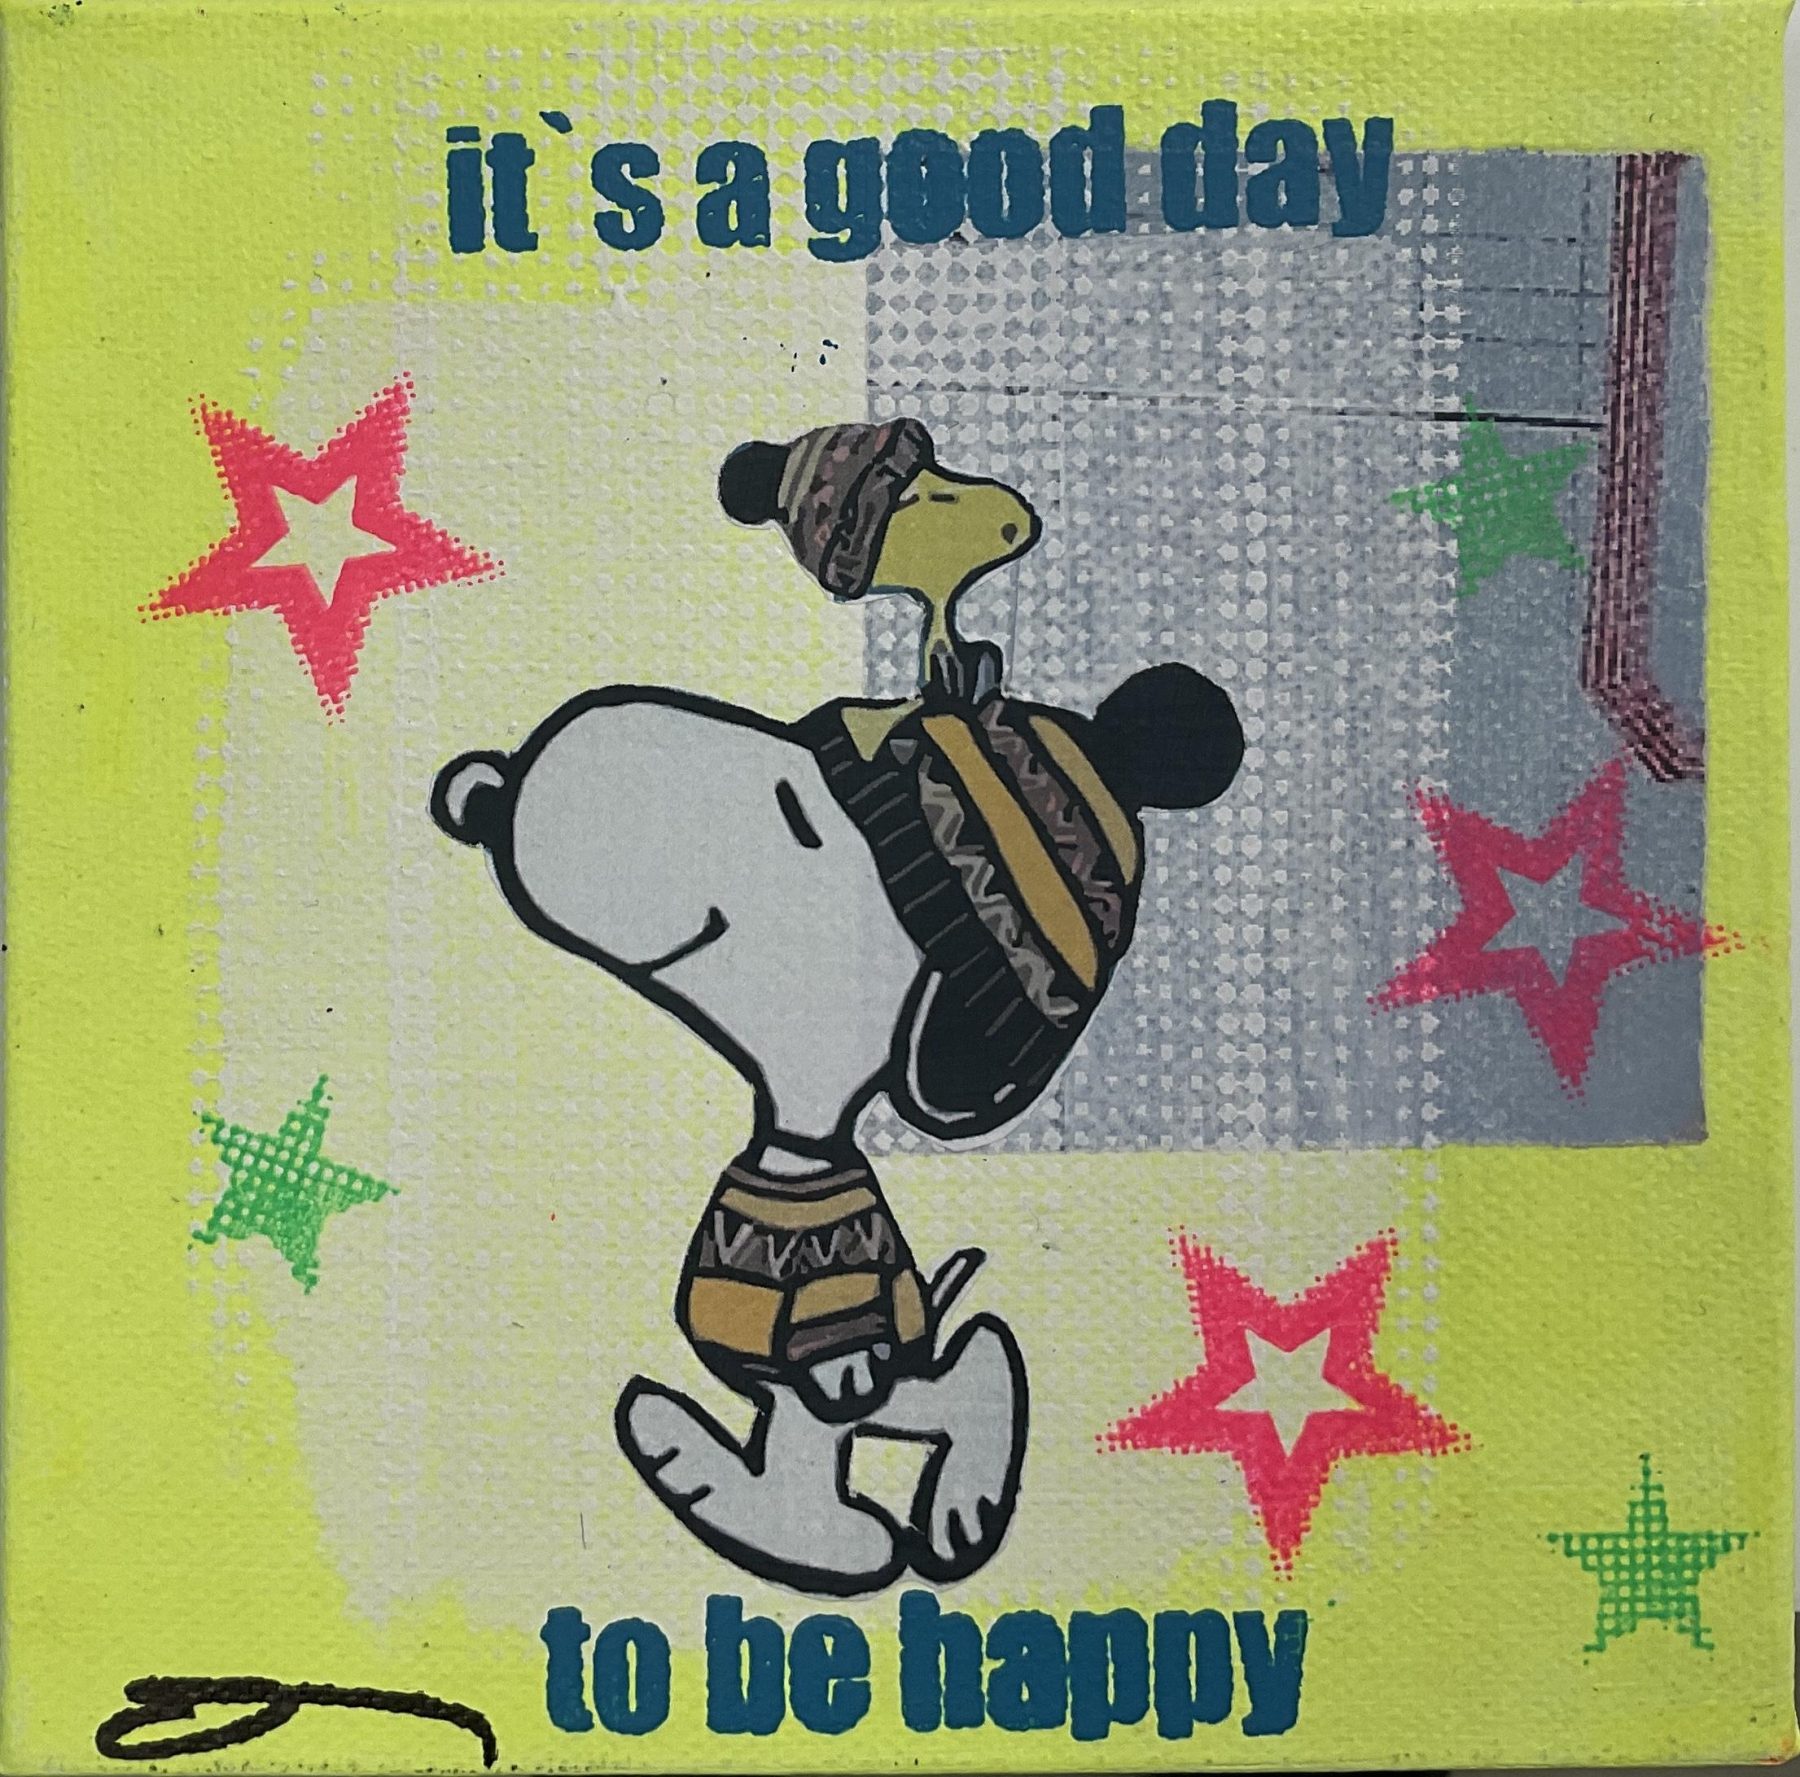 Snoopy "Good day" - Flores, Anna - k-2401AF05